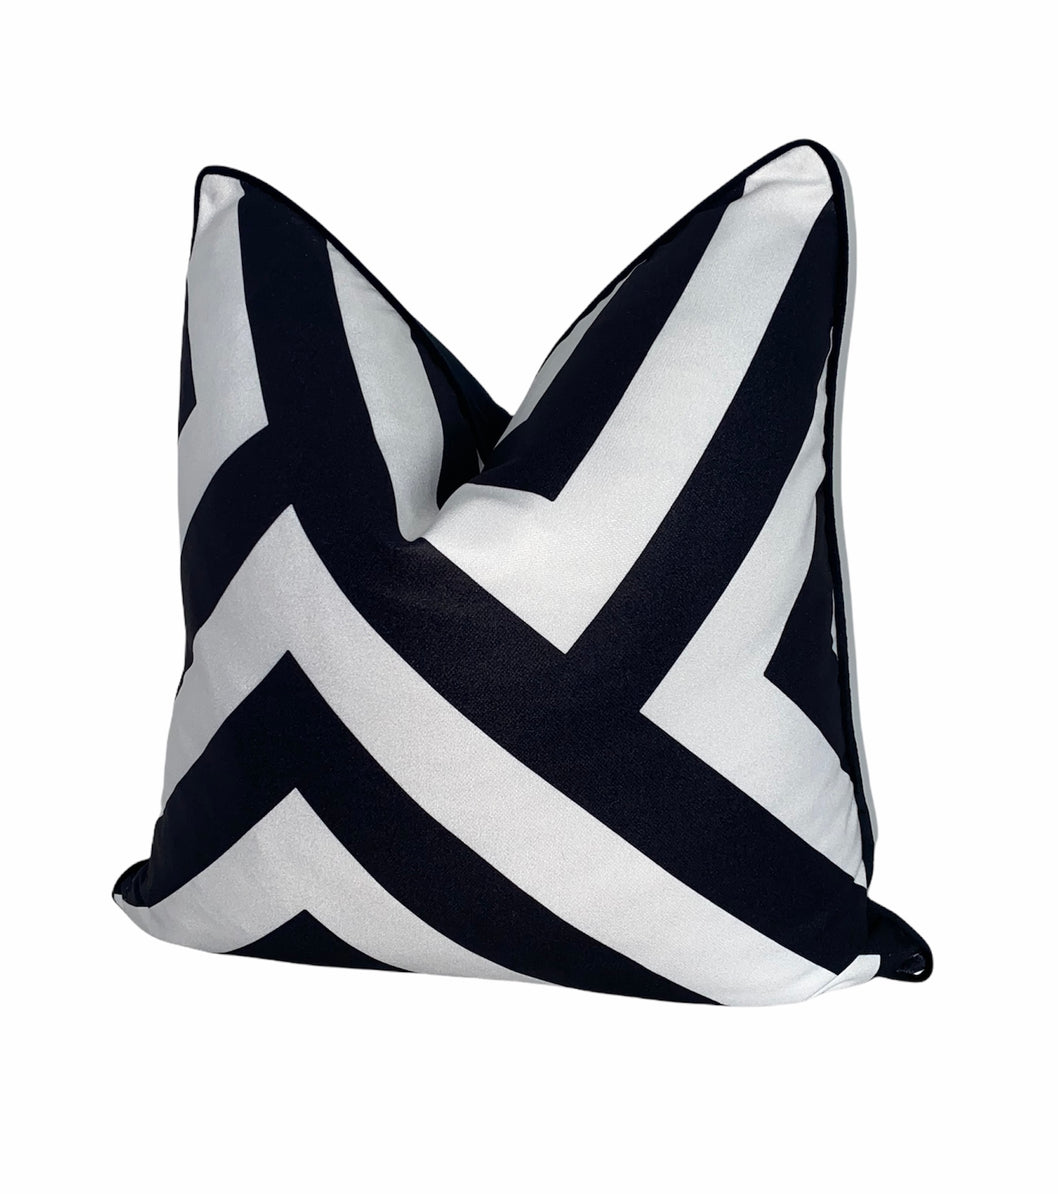 Geometric Black & White Cushion SKU 97532356 | Pillow Monochrome Velvet